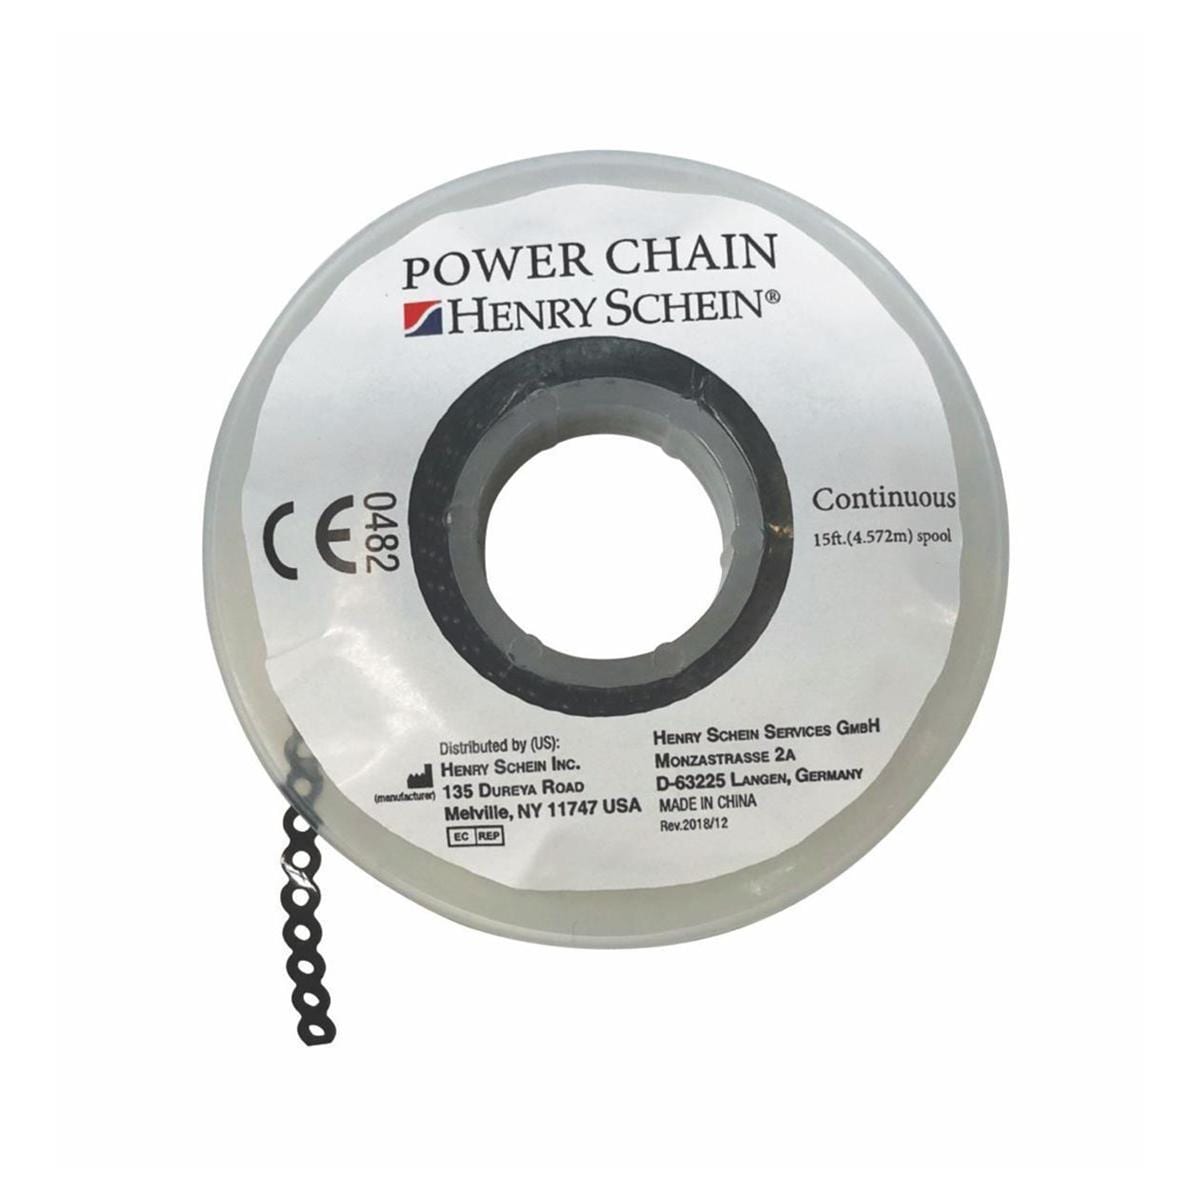 Power Chain Continuous - Black